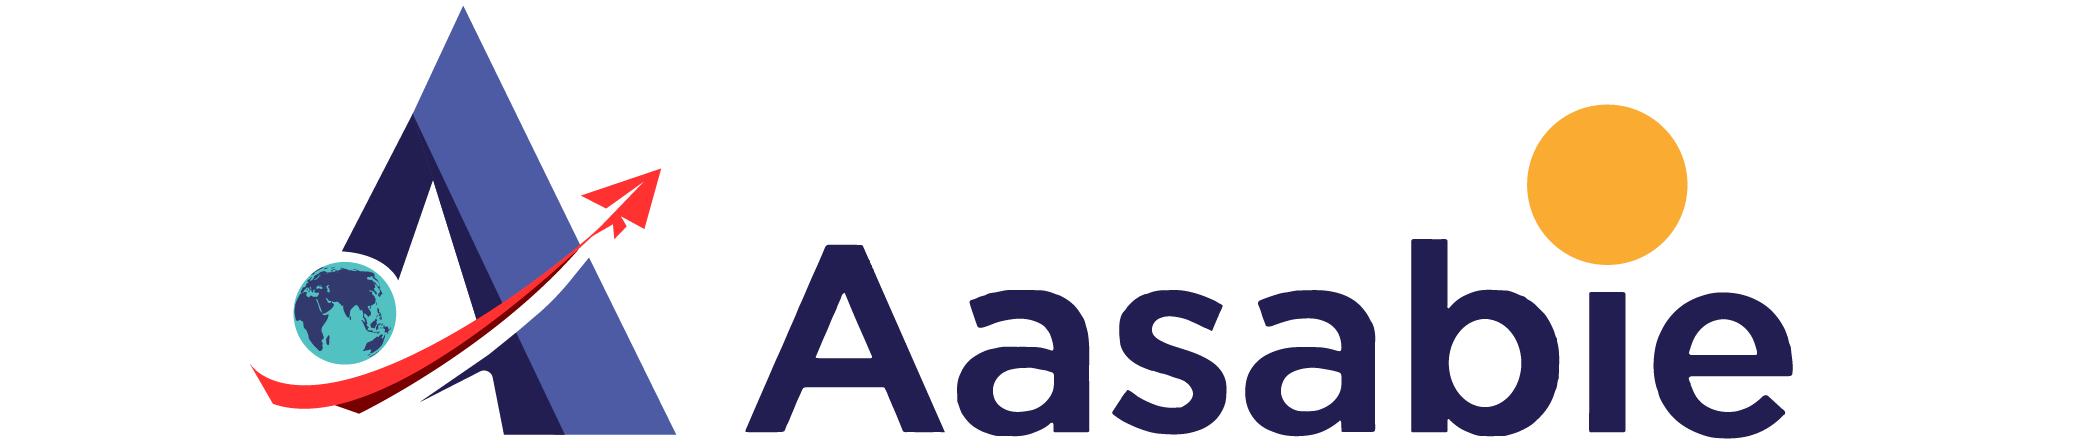 Aasabie Logo